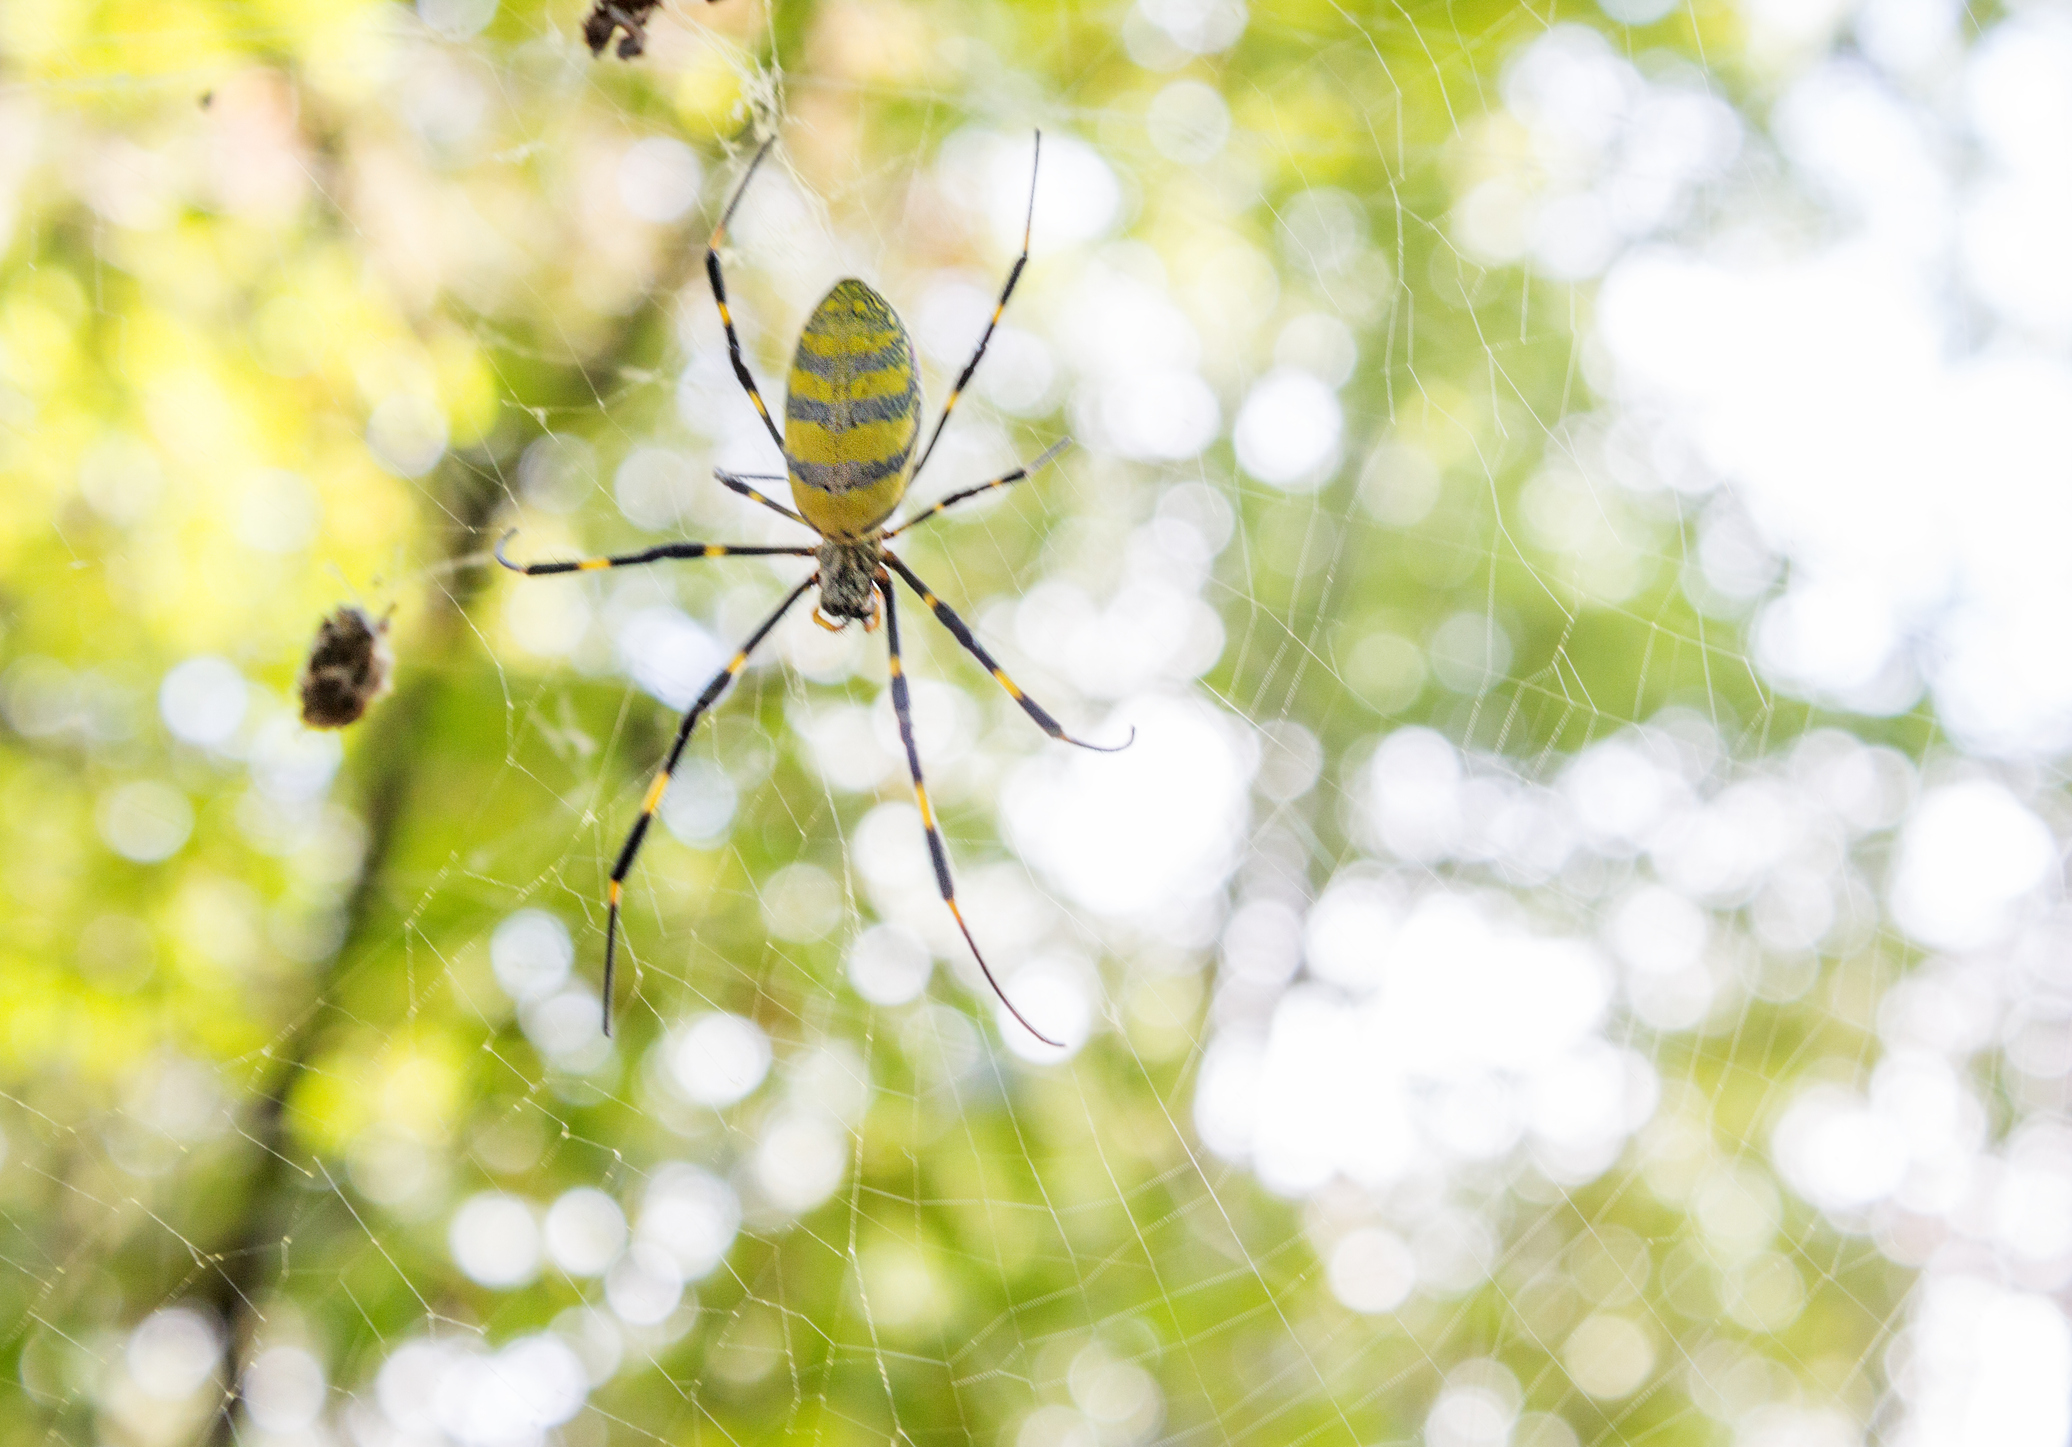 Black and yellow Joro spiders naturally shy, harmless, UGA